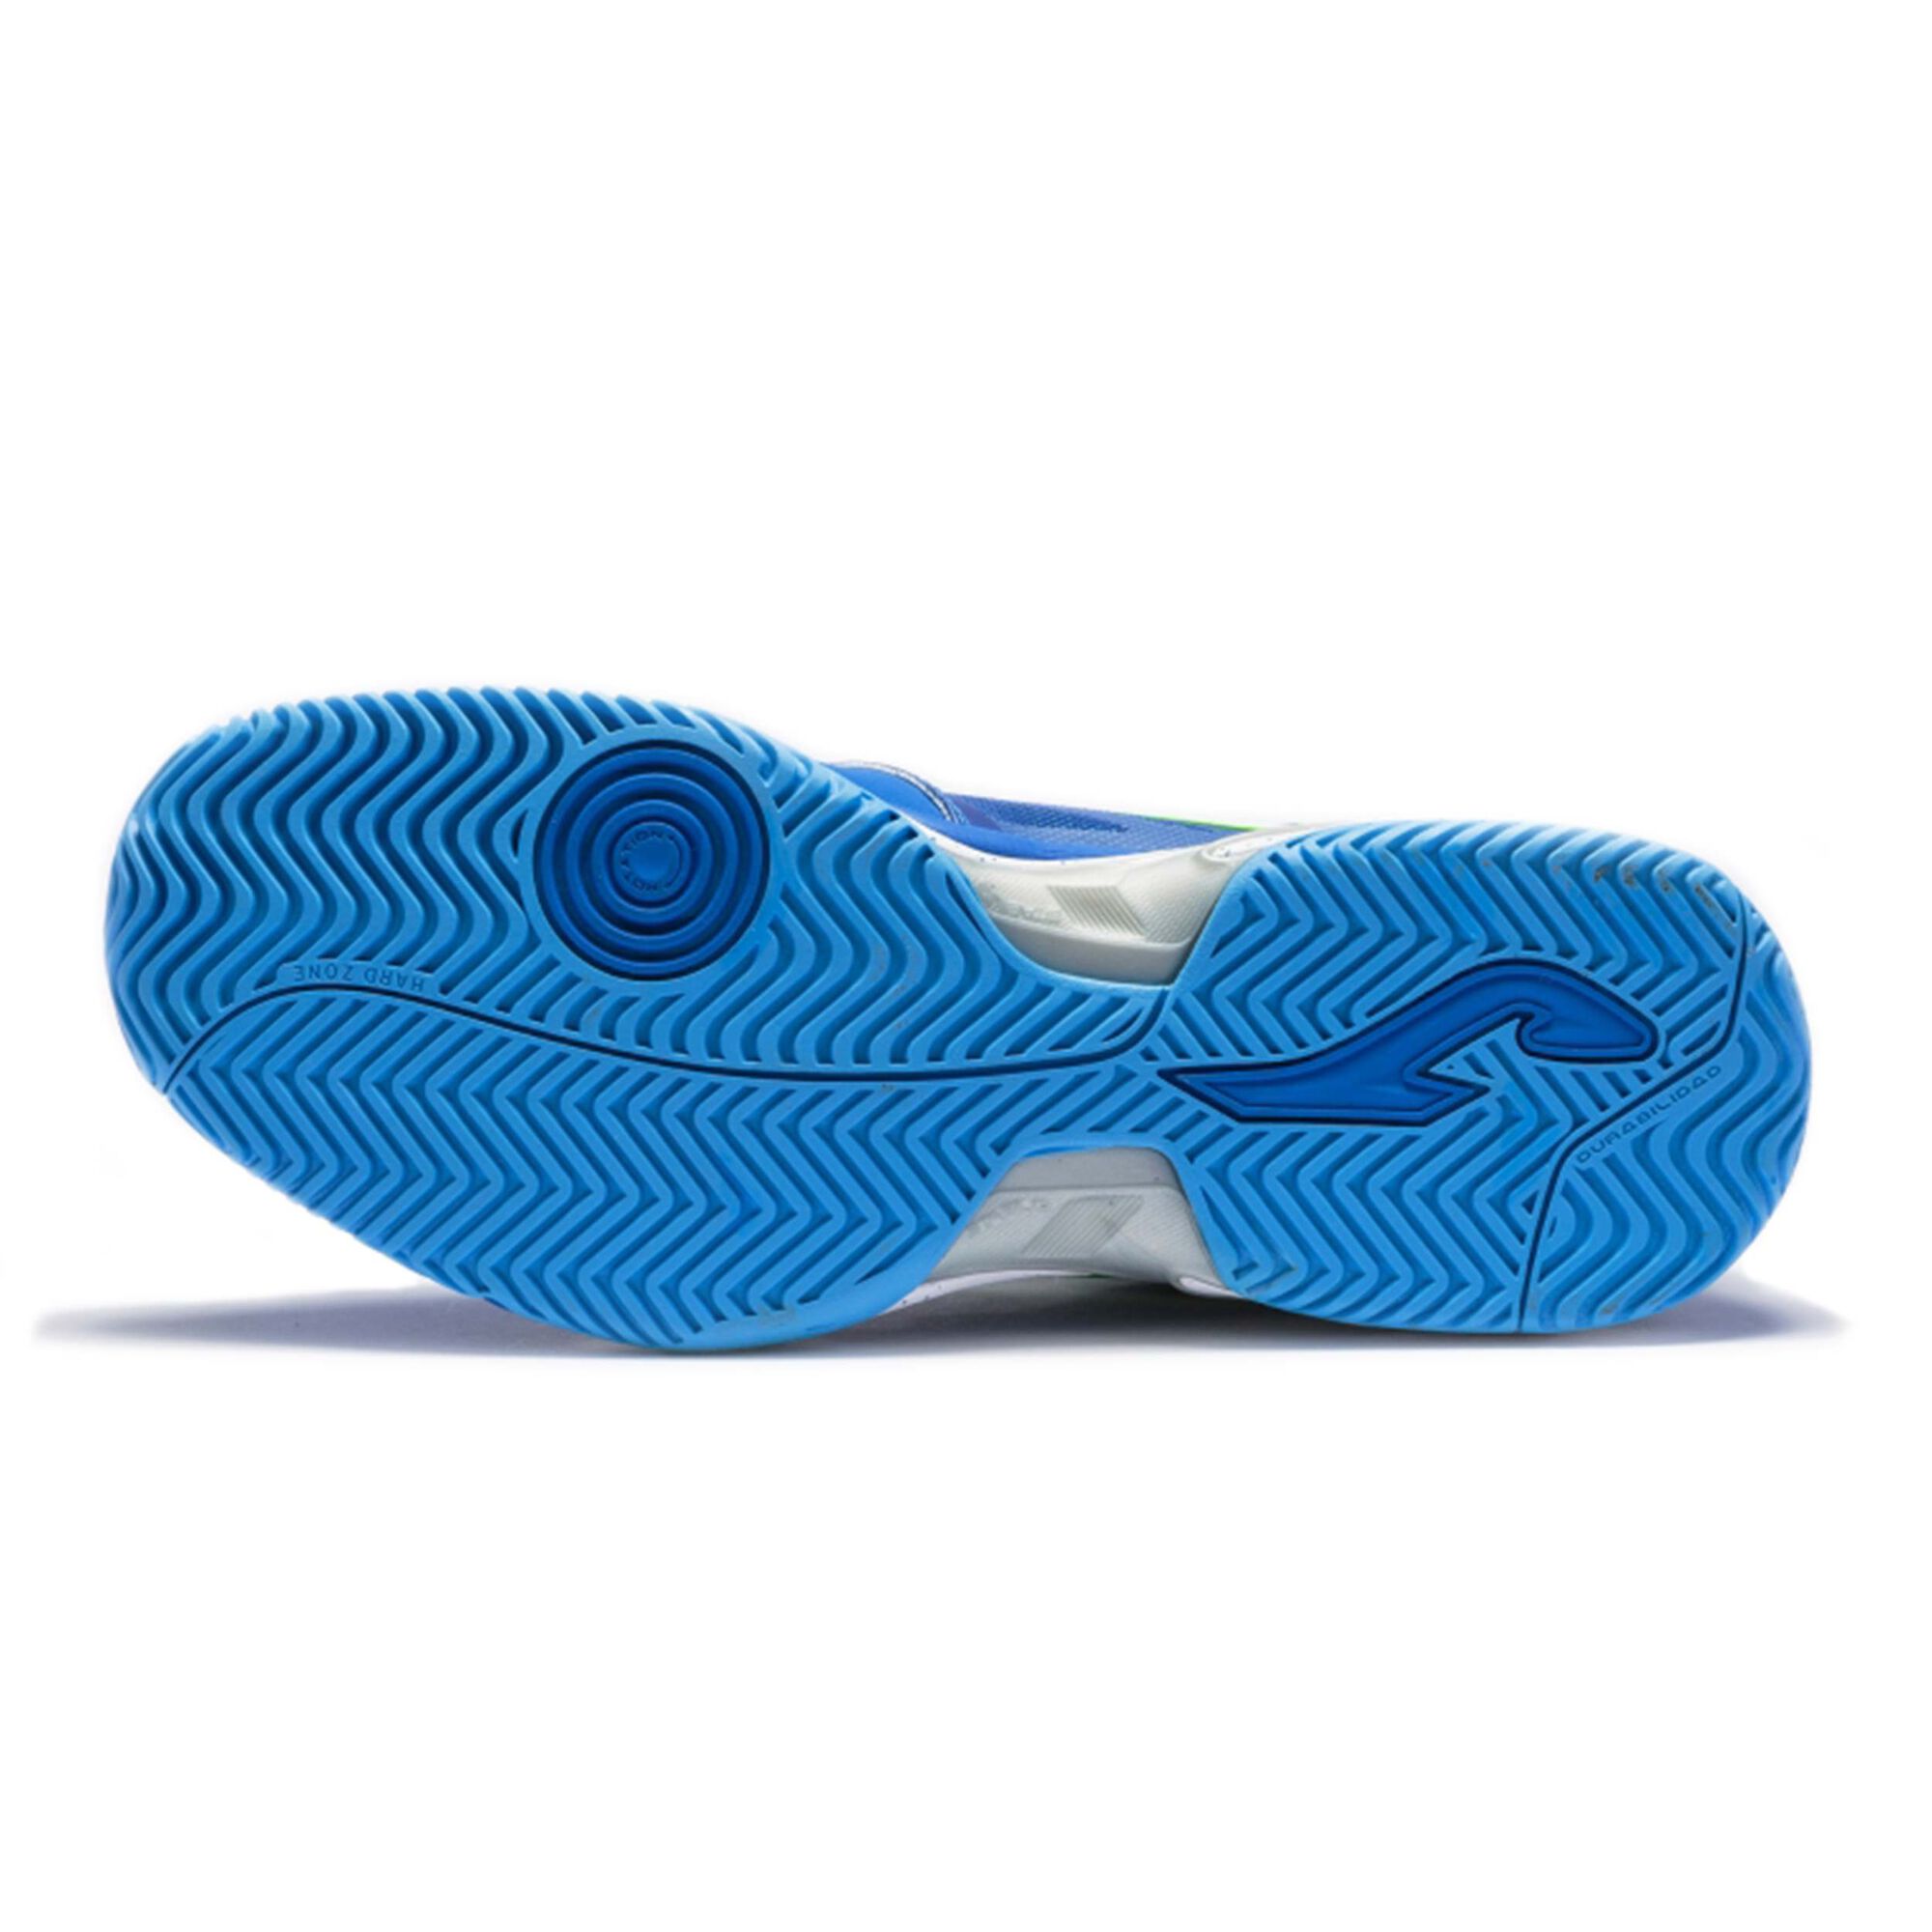 Joma Pro 2103 All Court Shoe Men Blue, White | Padel-Point